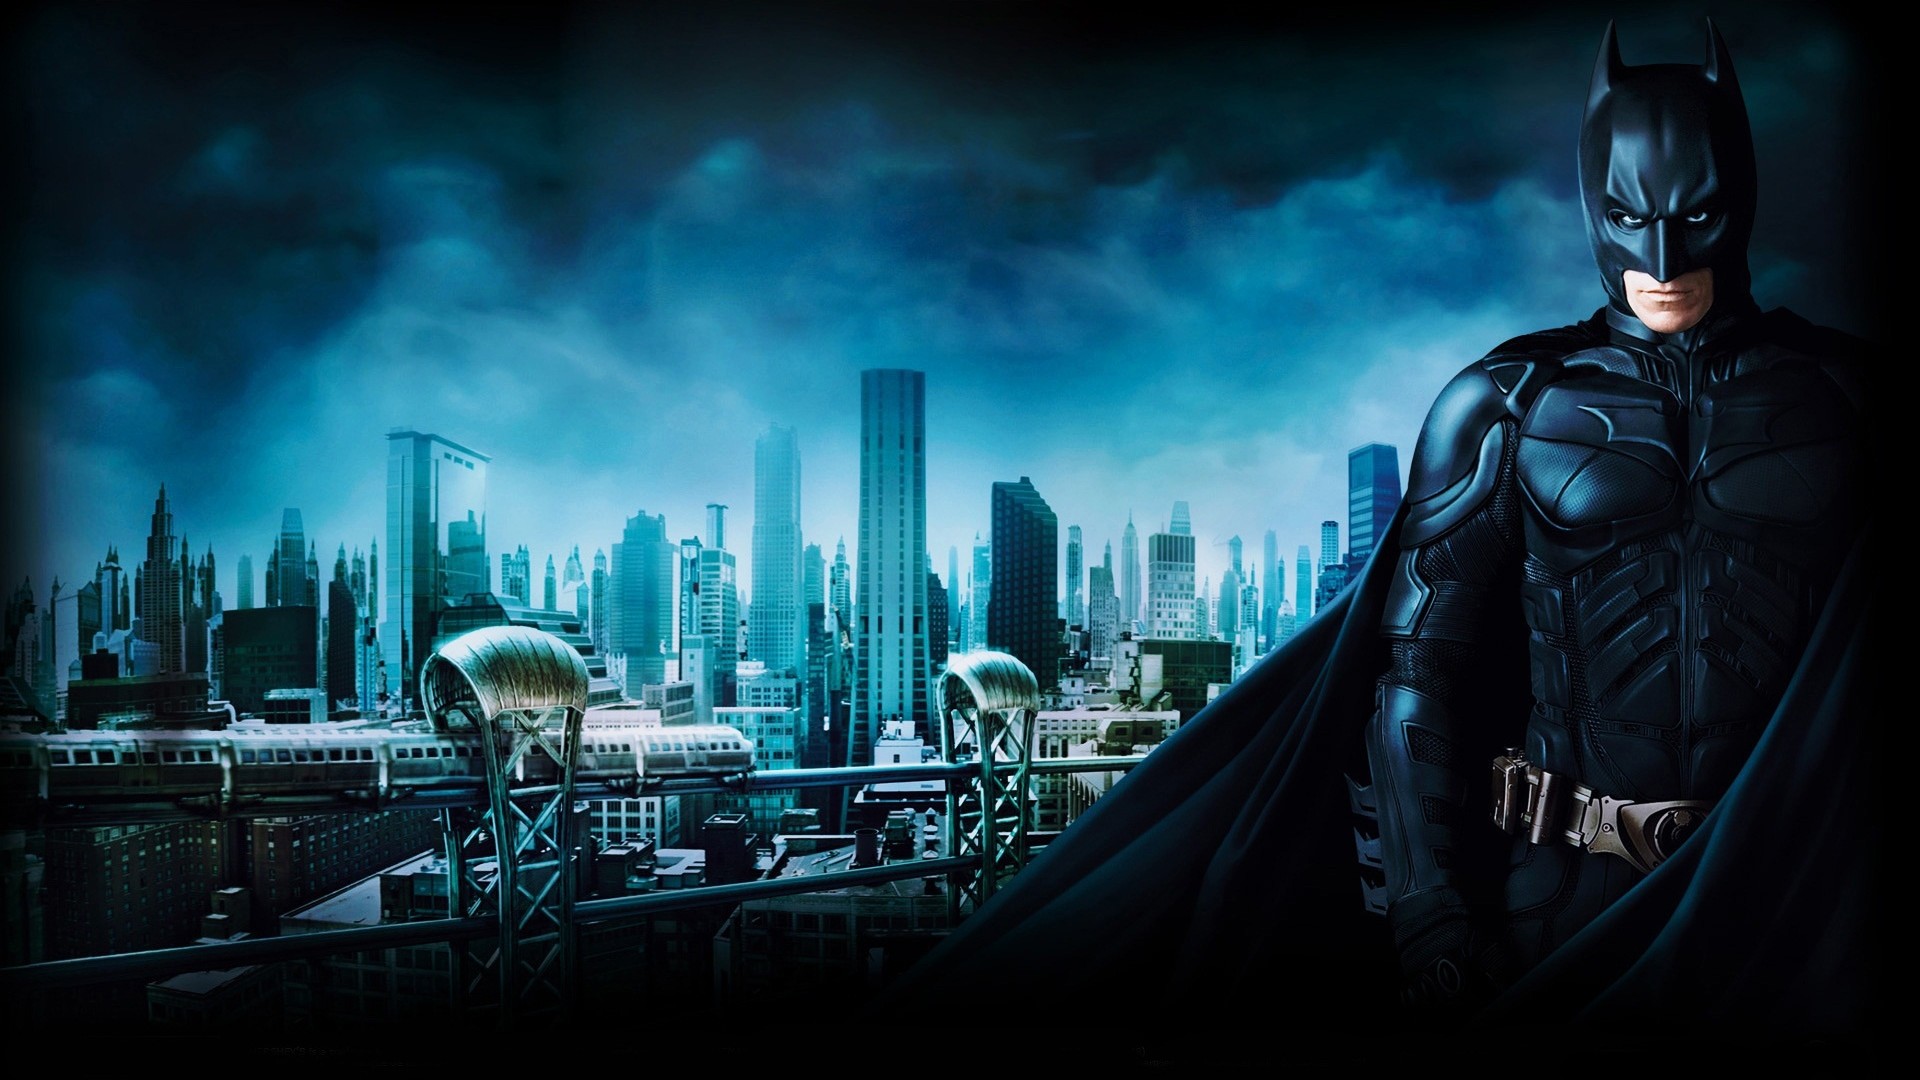 Batman Begins Gotham Train Image HD Wallpaper And Make This